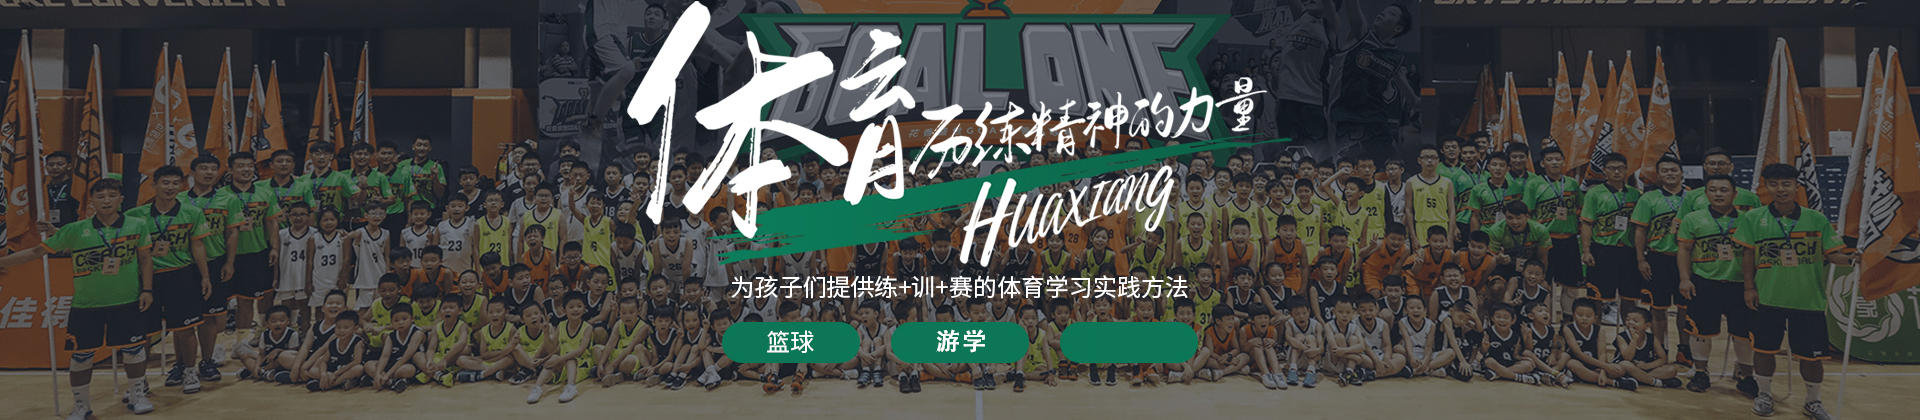 北京hoopkings篮球